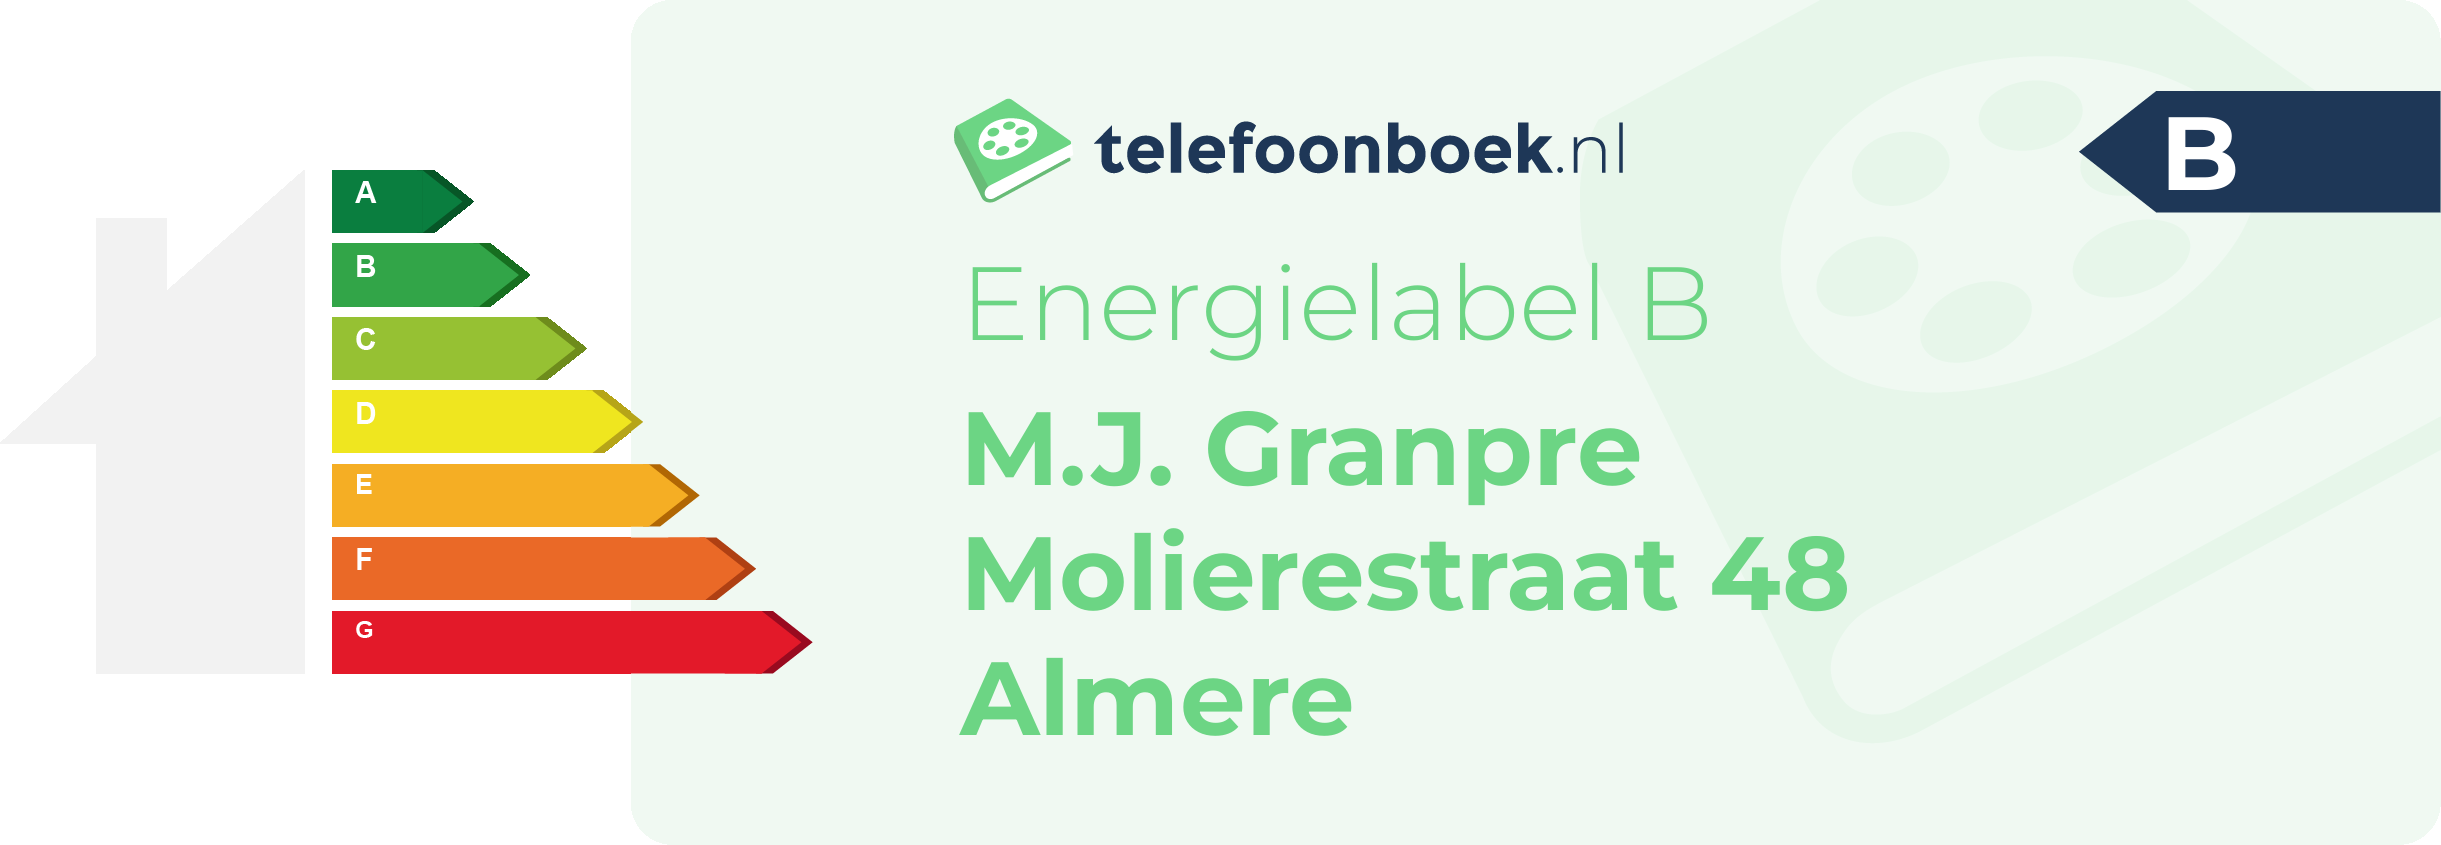 Energielabel M.J. Granpre Molierestraat 48 Almere